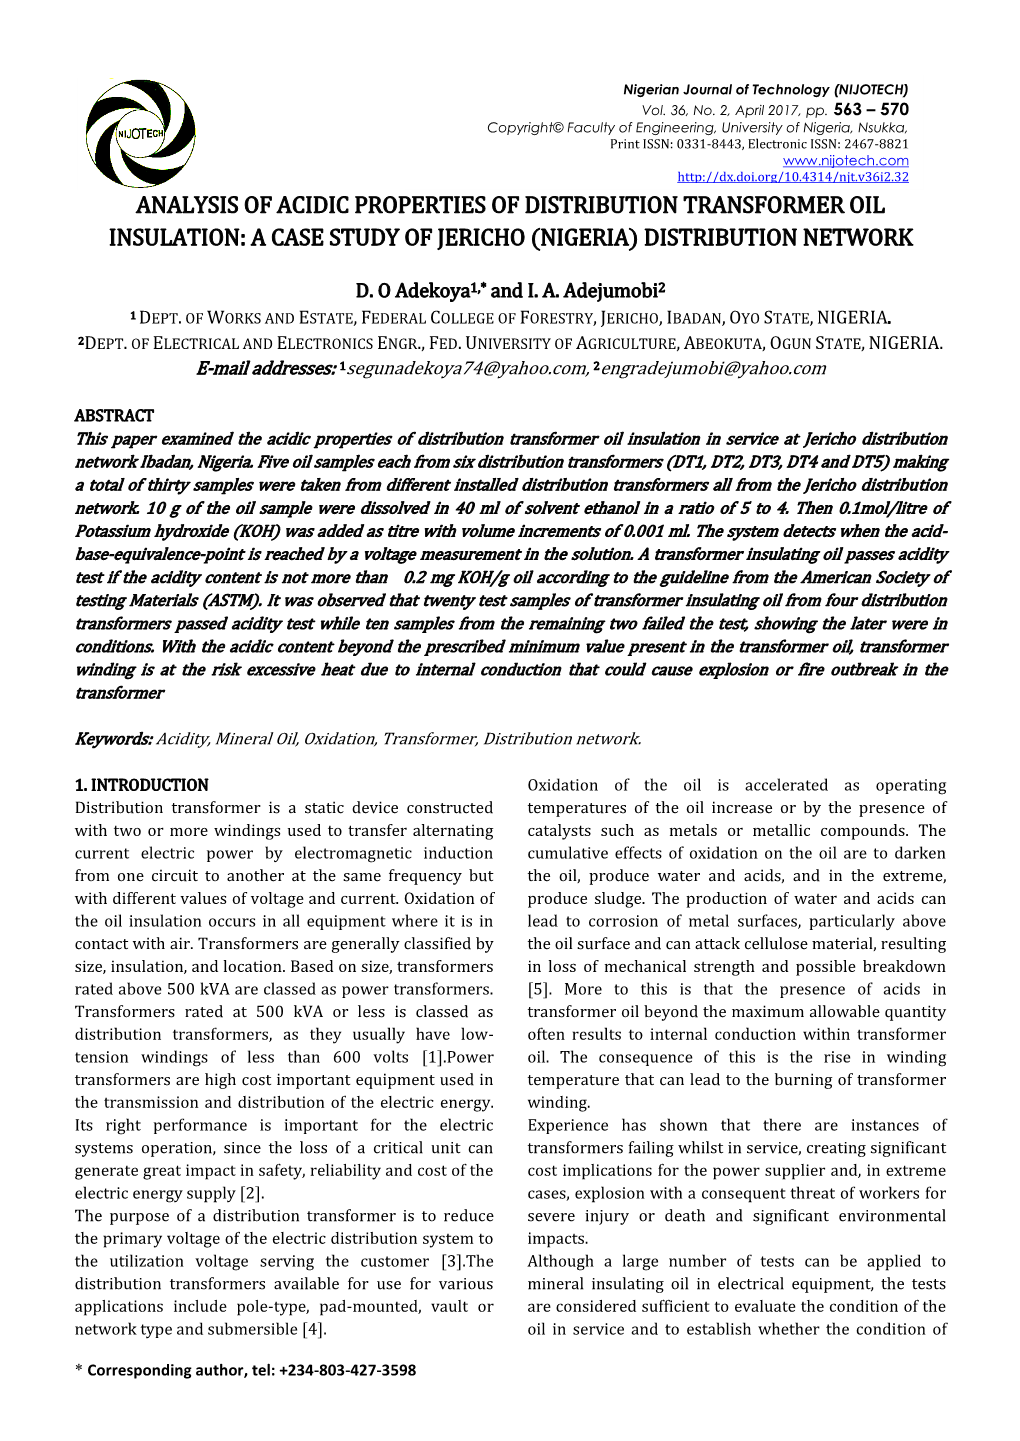 Analysis of Acidic Properties of Distribution Transformer Oil Insulation: a Case Study of Jericho (Nigeria) Distribution Network